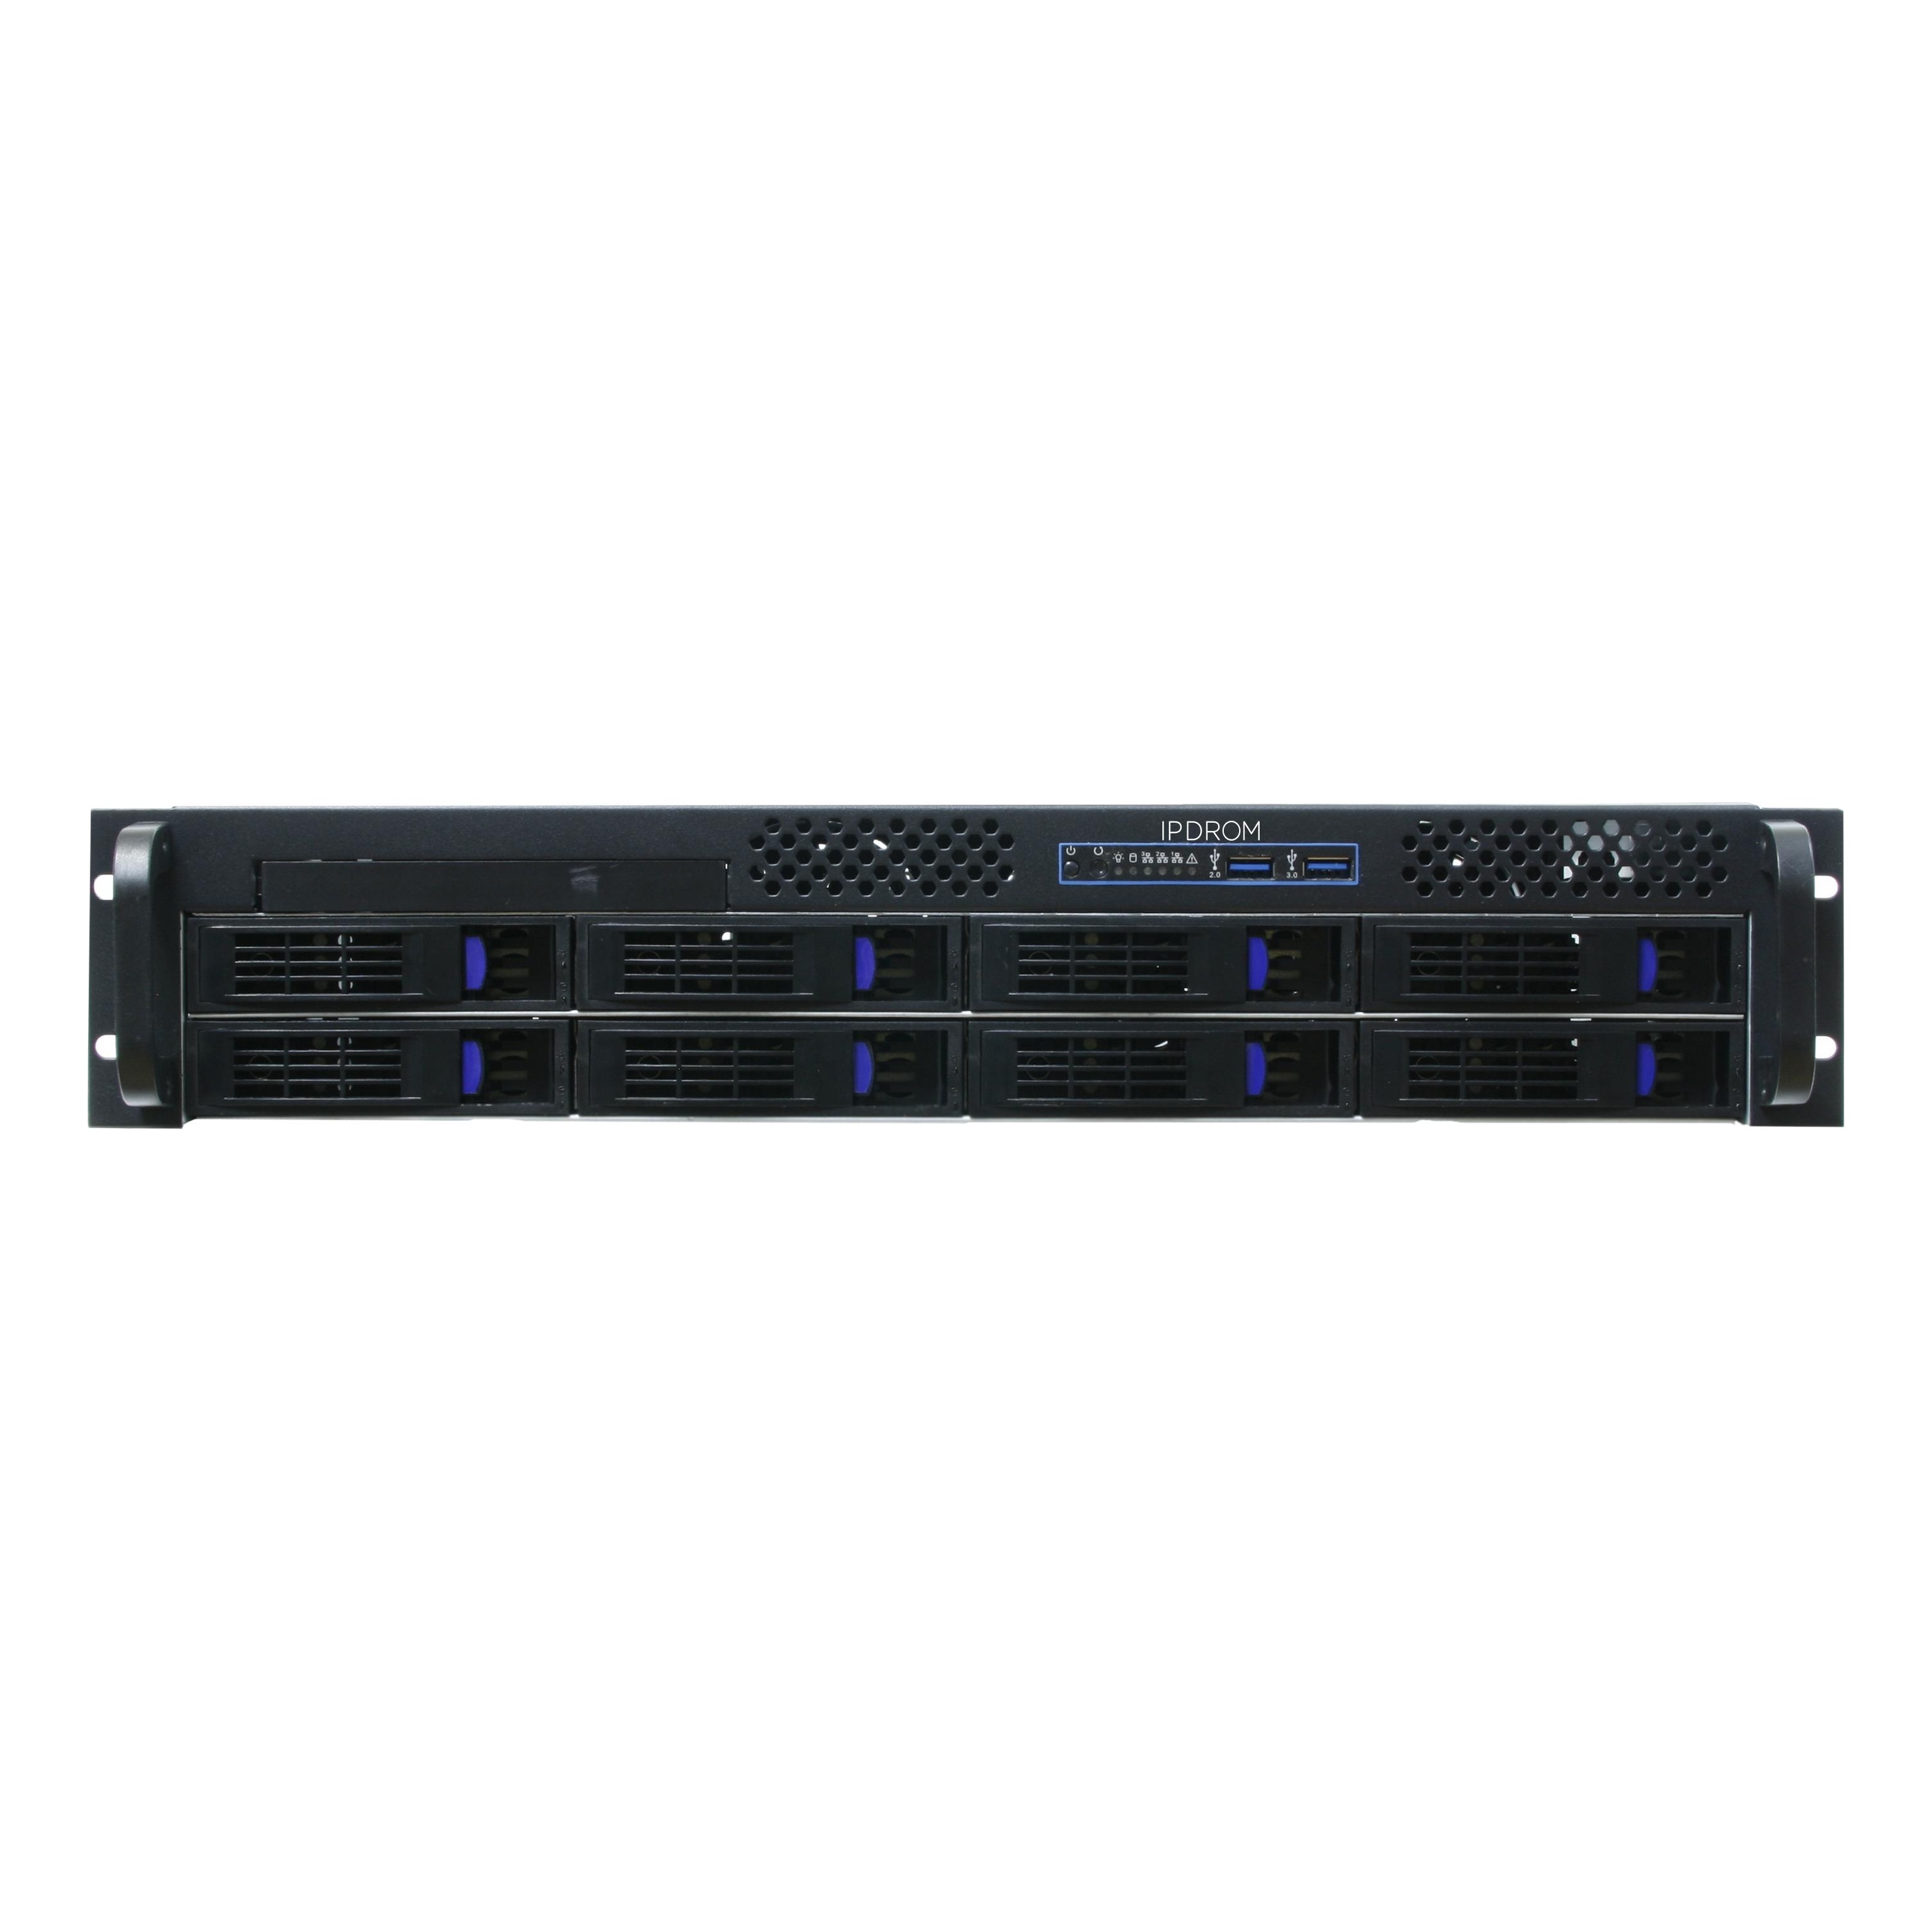 Сервер IPDROM Enterprise (E-32-РД-С2-24/Р5-2Э)